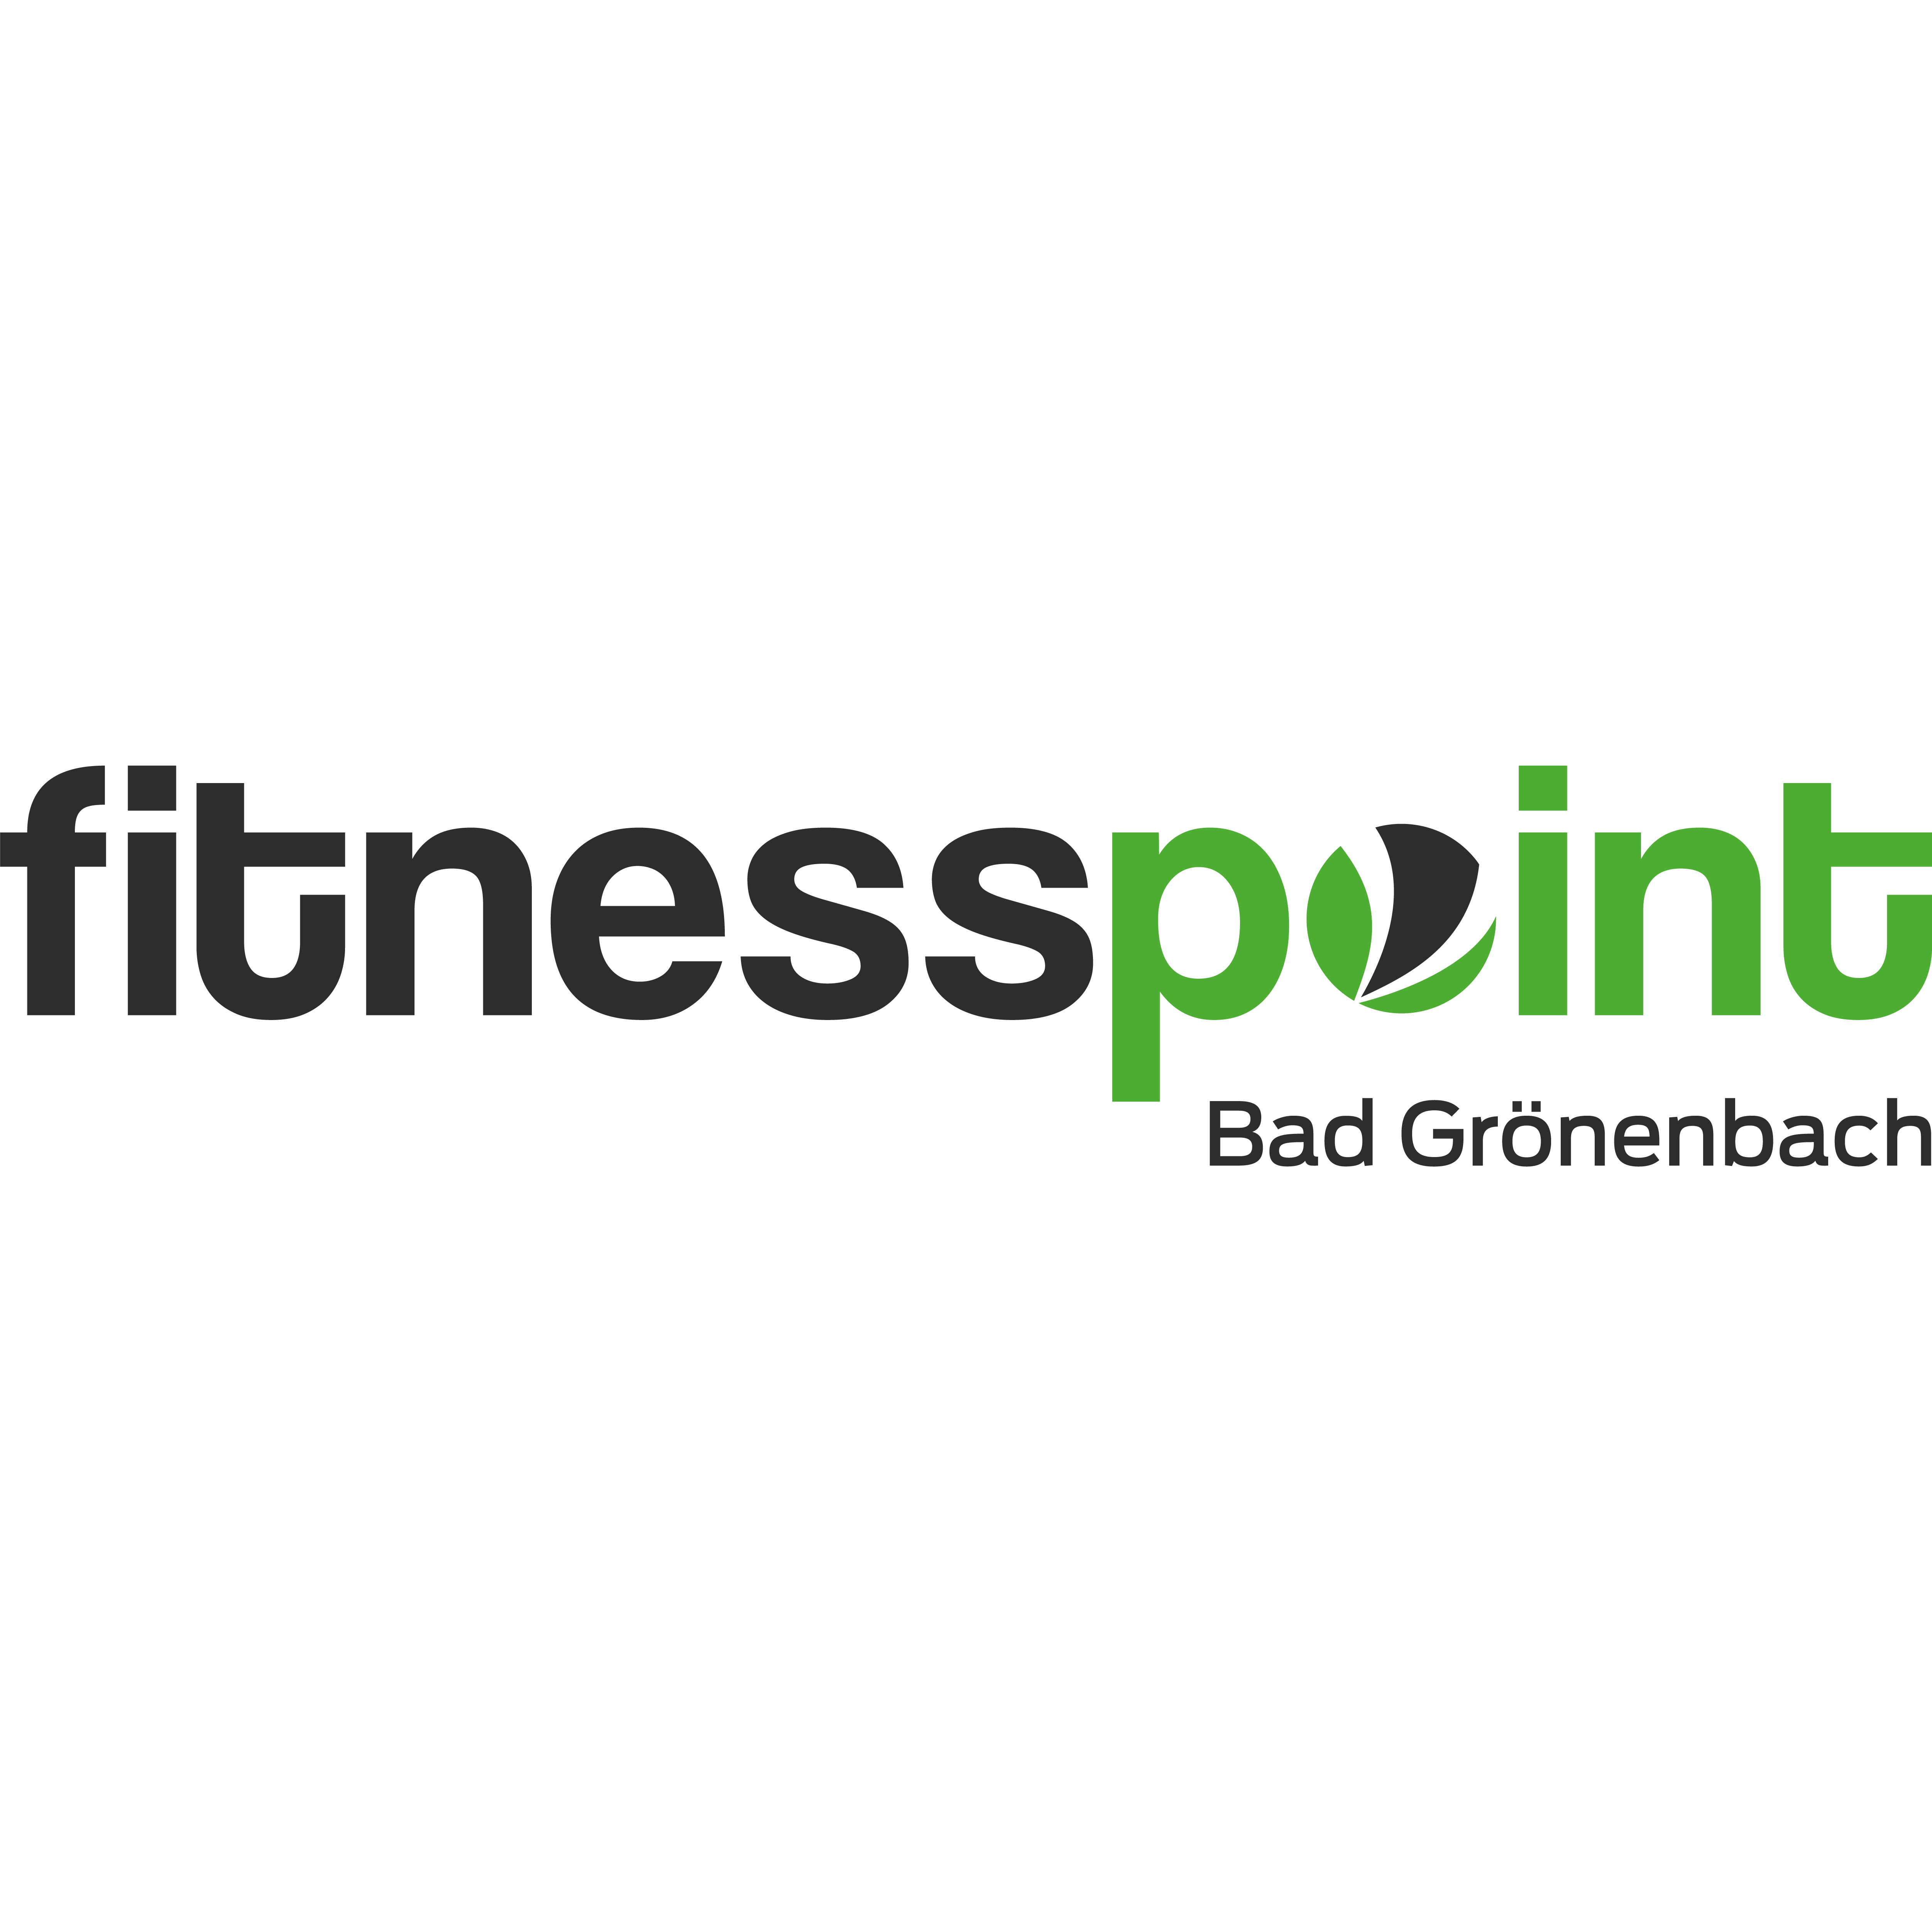 Fitnesspoint Bad Grönenbach Logo